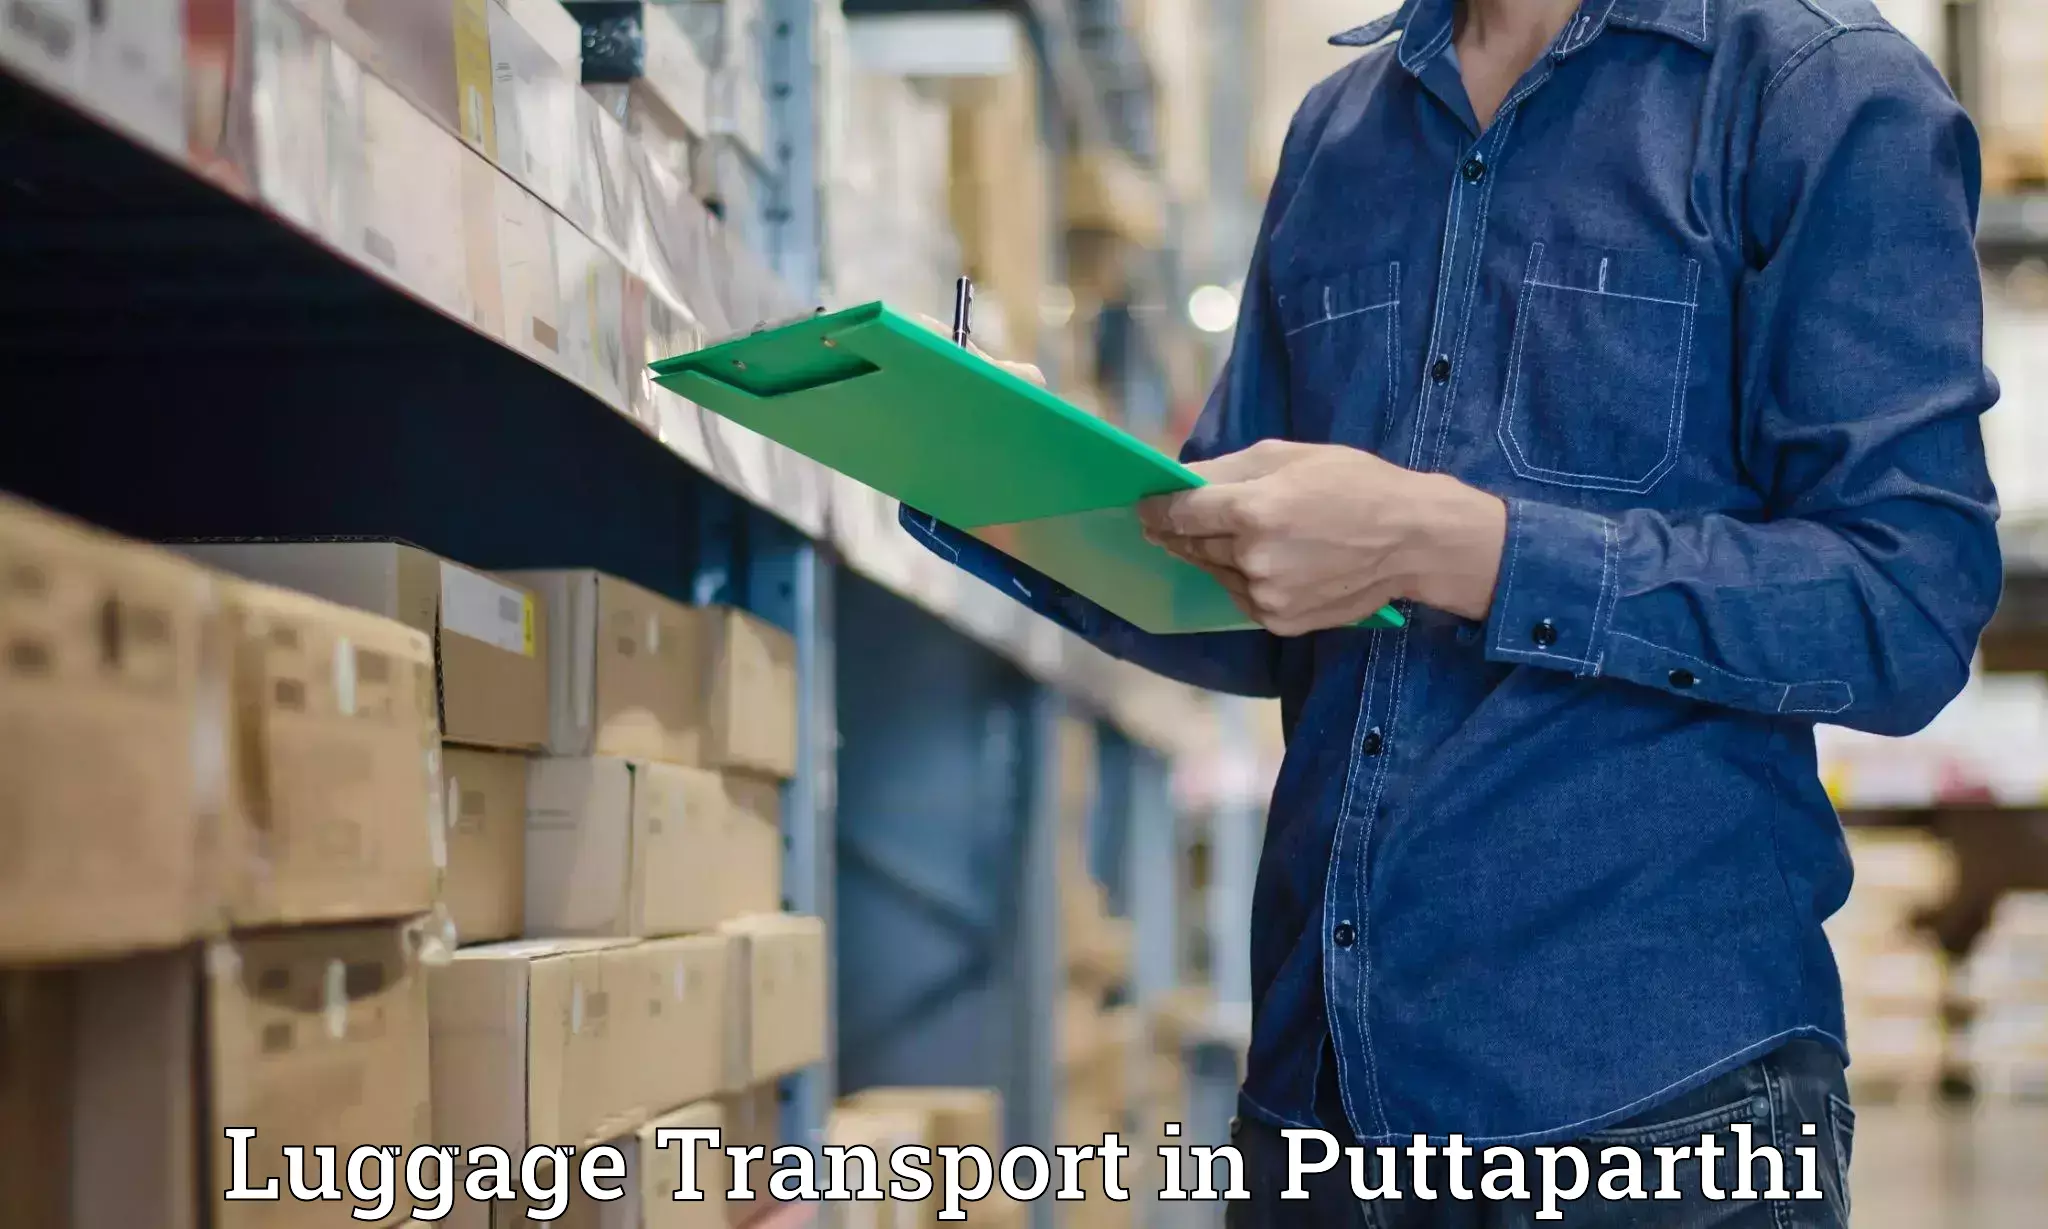 Multi-destination luggage transport in Puttaparthi